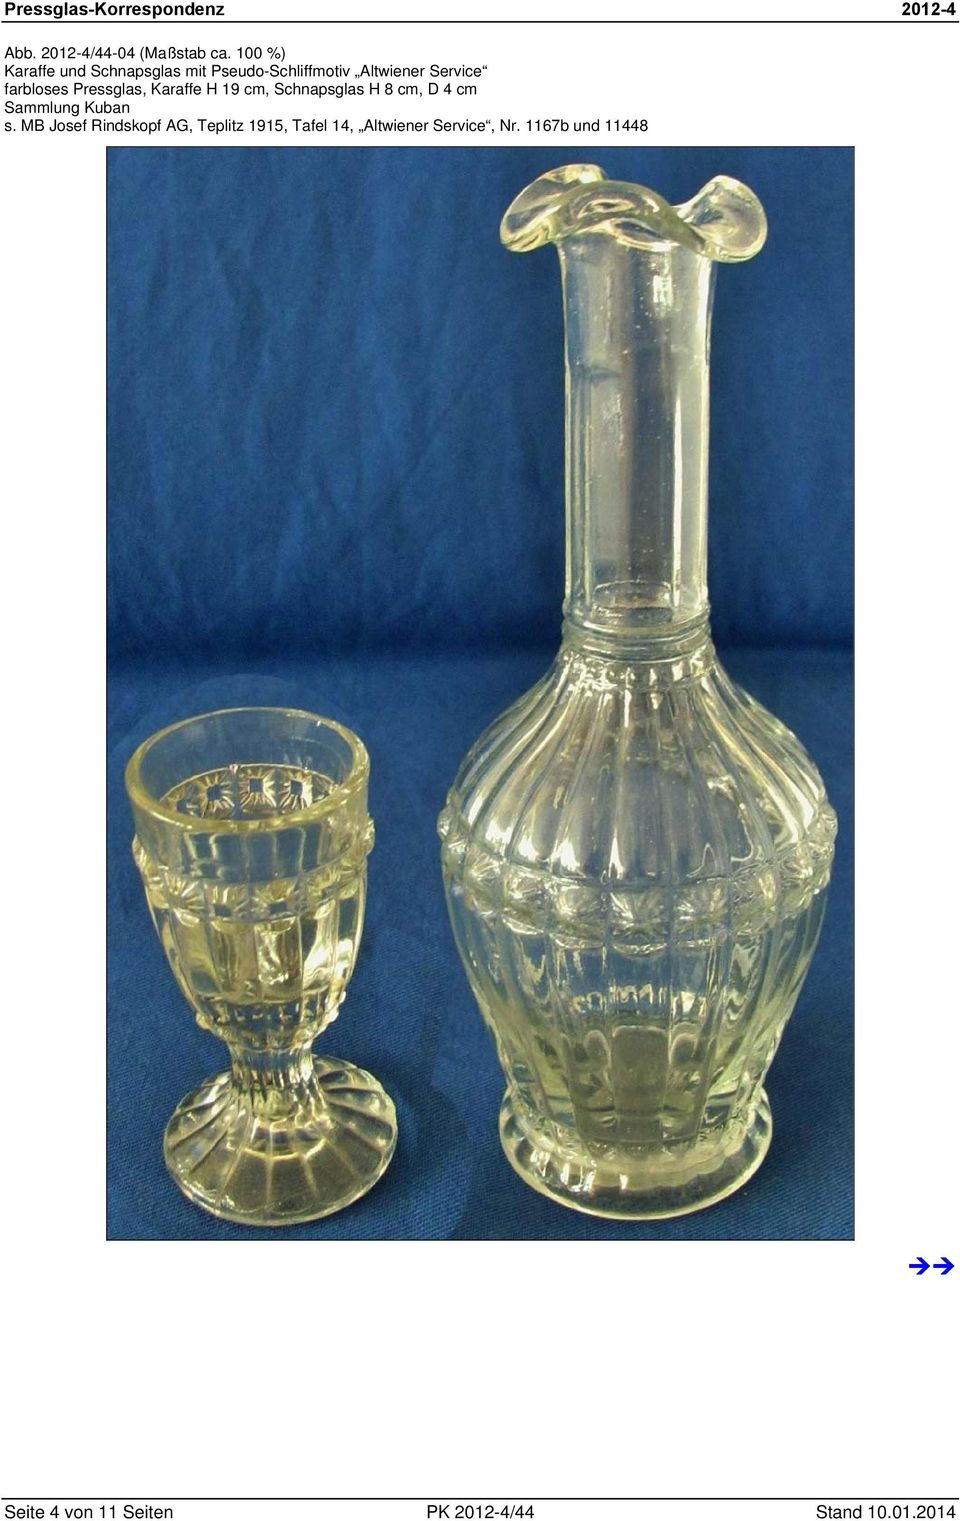 farbloses Pressglas, Karaffe H 19 cm, Schnapsglas H 8 cm, D 4 cm Sammlung Kuban